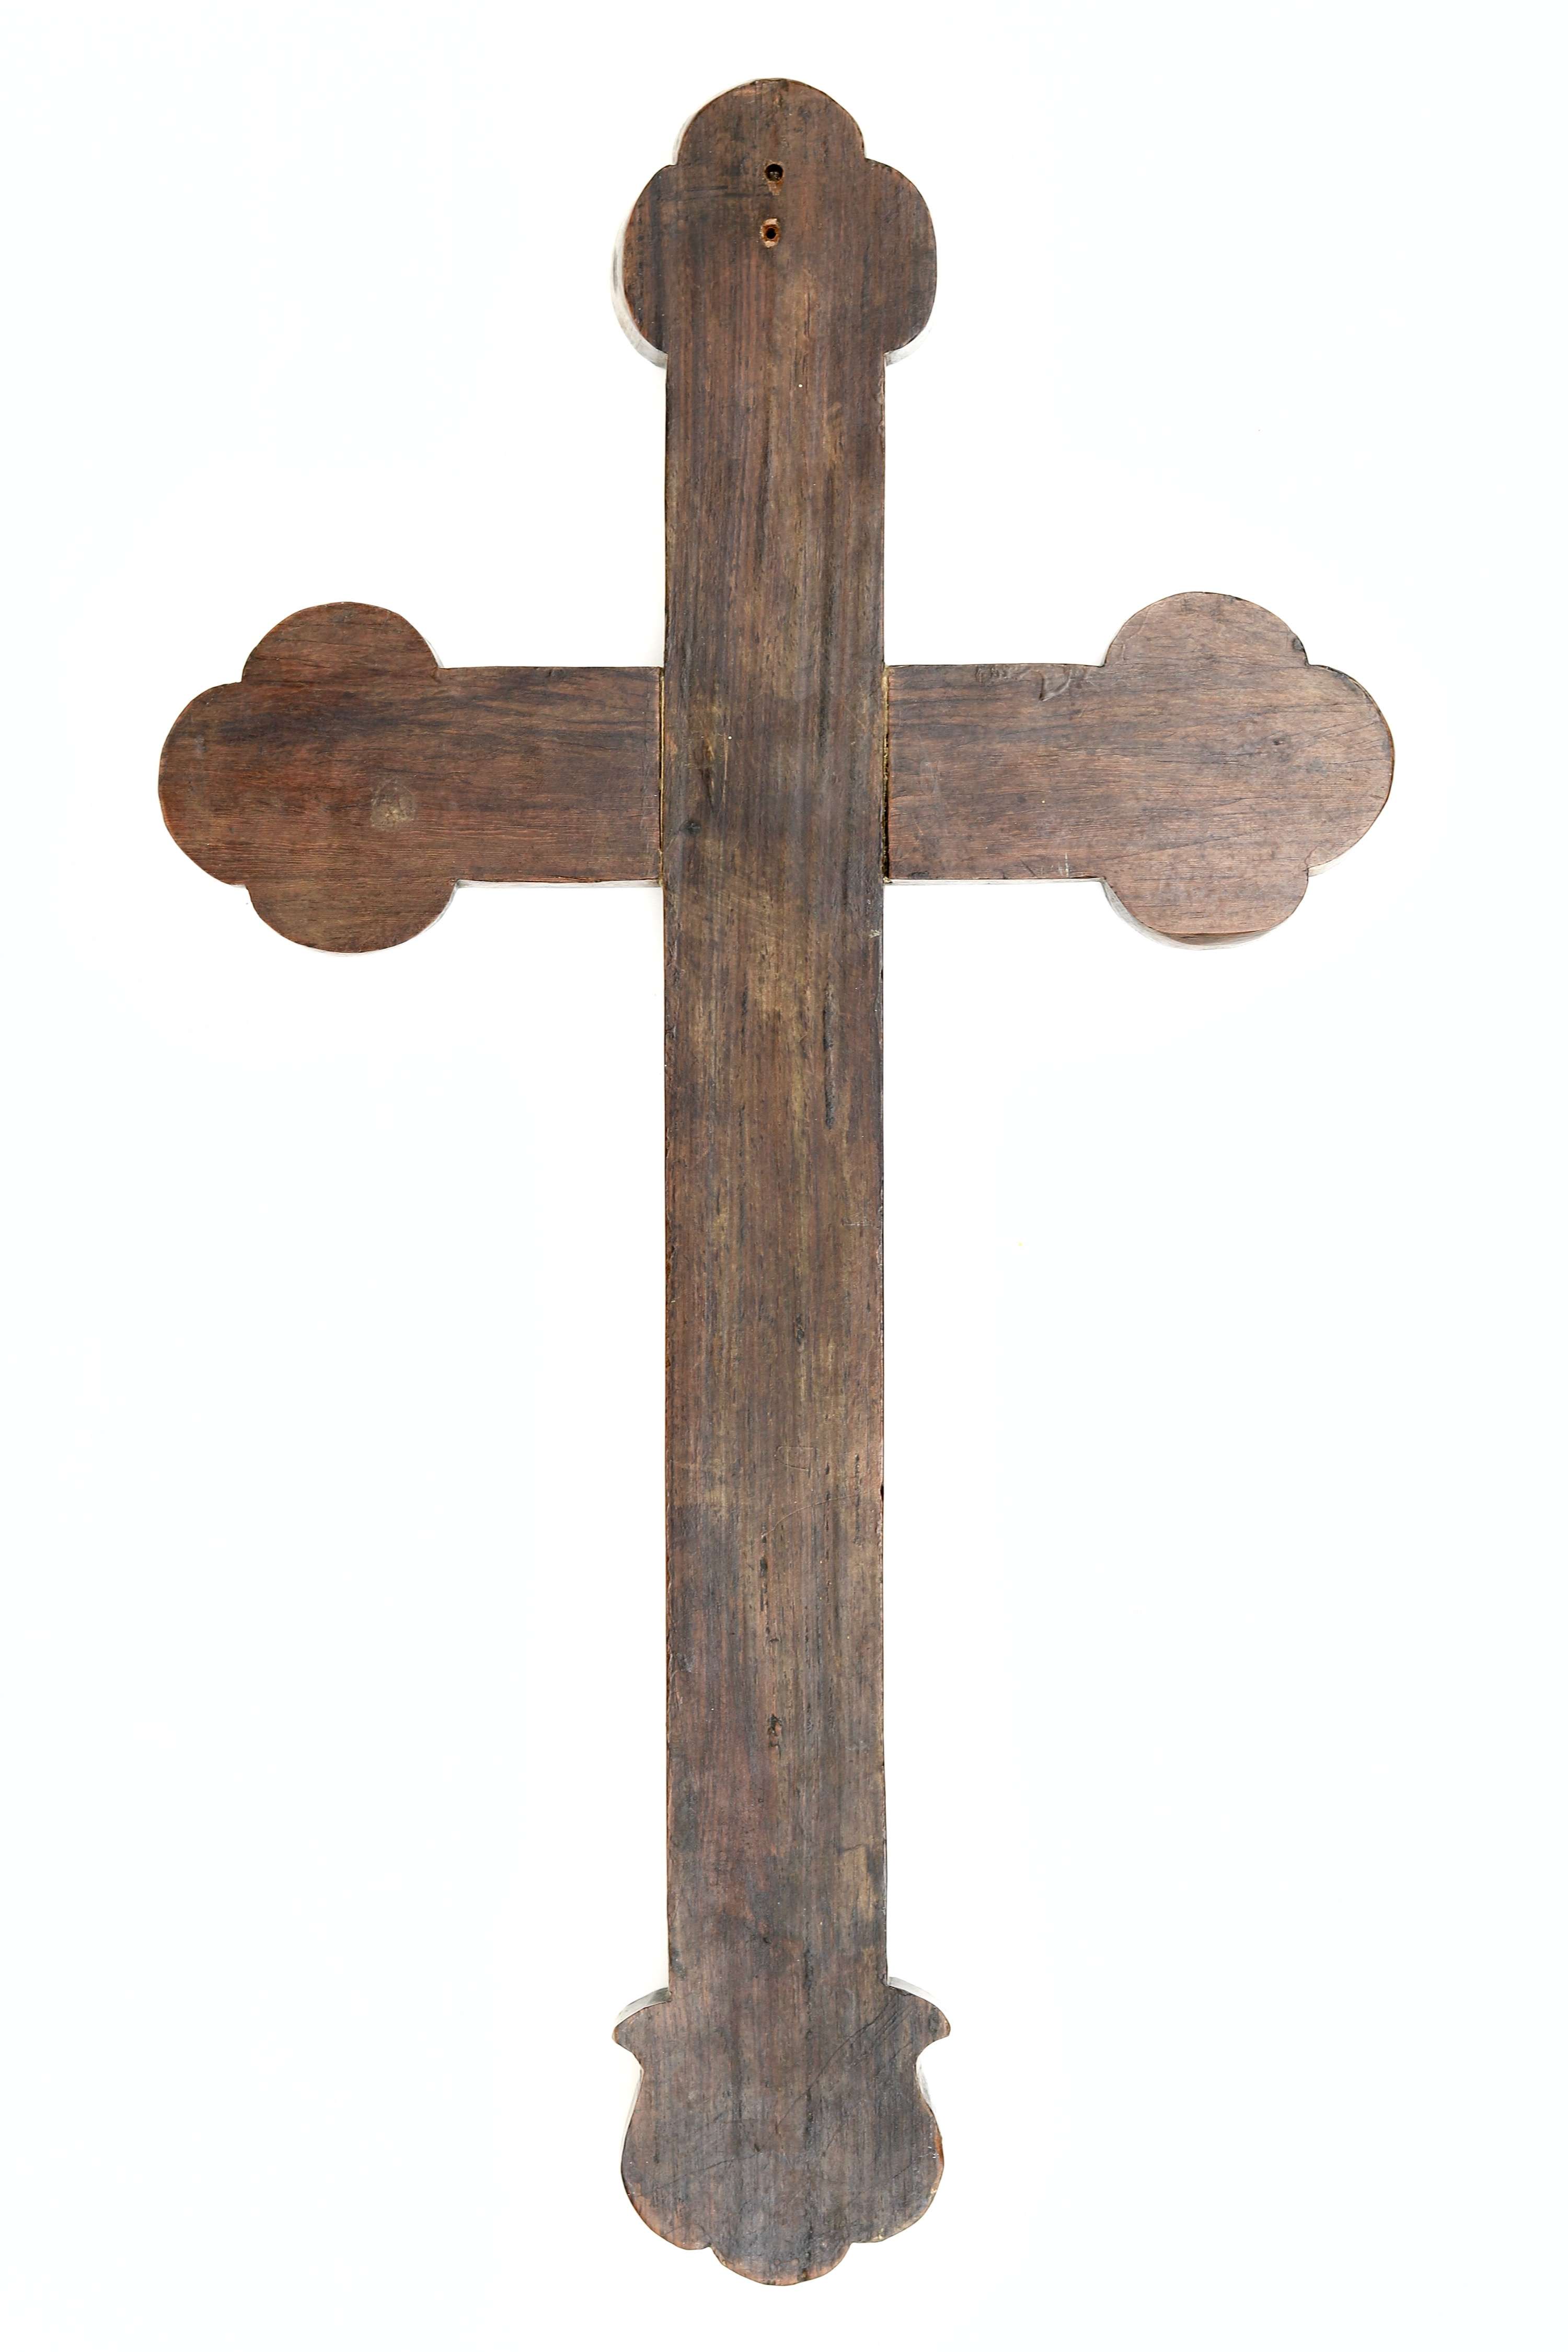 Detail Images Of Christian Crosses Nomer 11